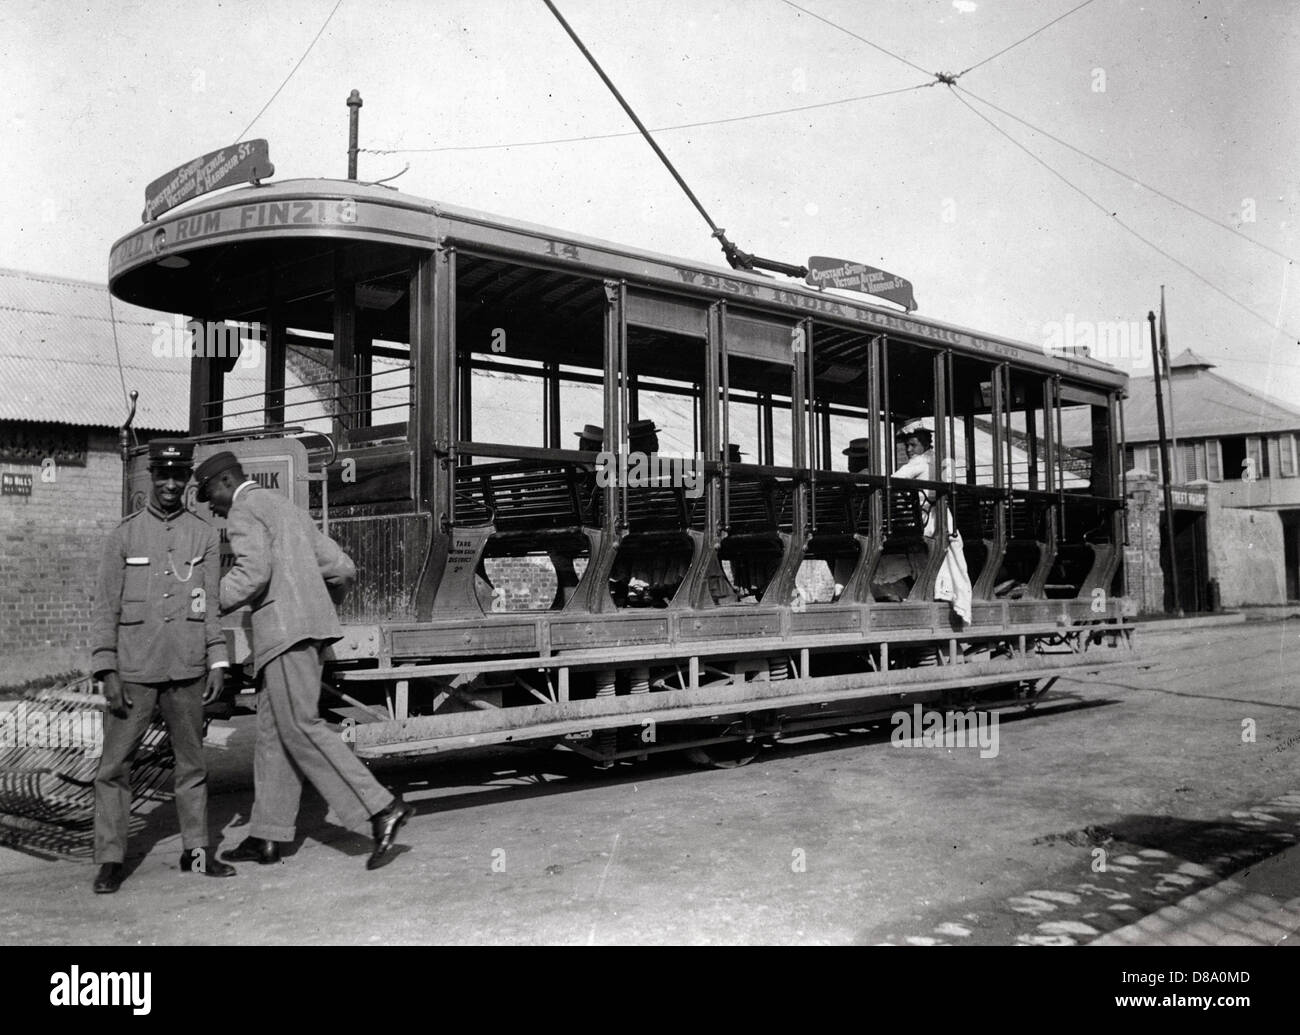 West India Electric Co Streetcar, Kingston, Jamaica, 1905 Stock Photo